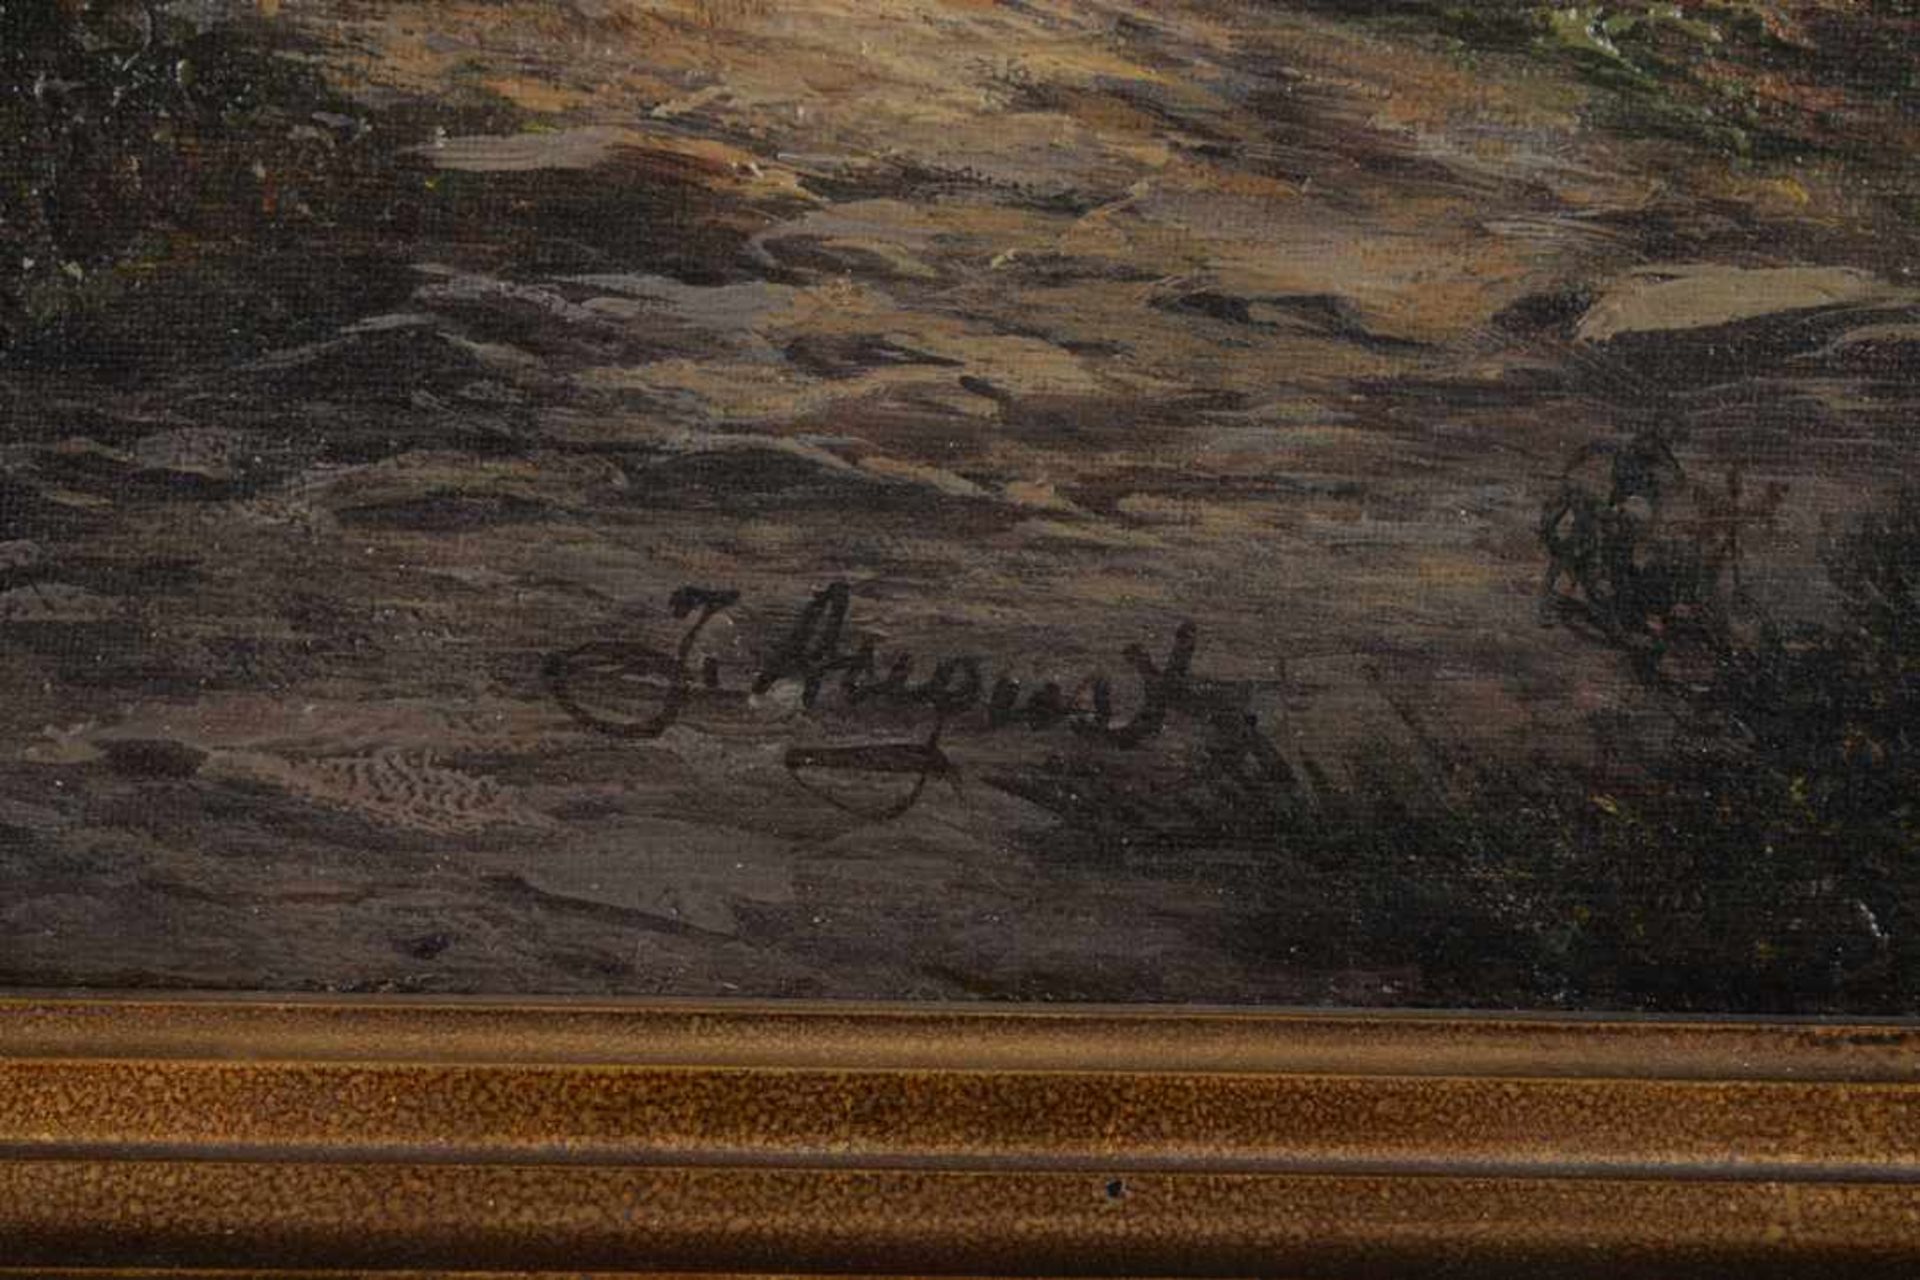 Romantische Landschaft, signiert J. August. Öl auf Leinwand, Datierung um 1870, unten links - Image 4 of 7